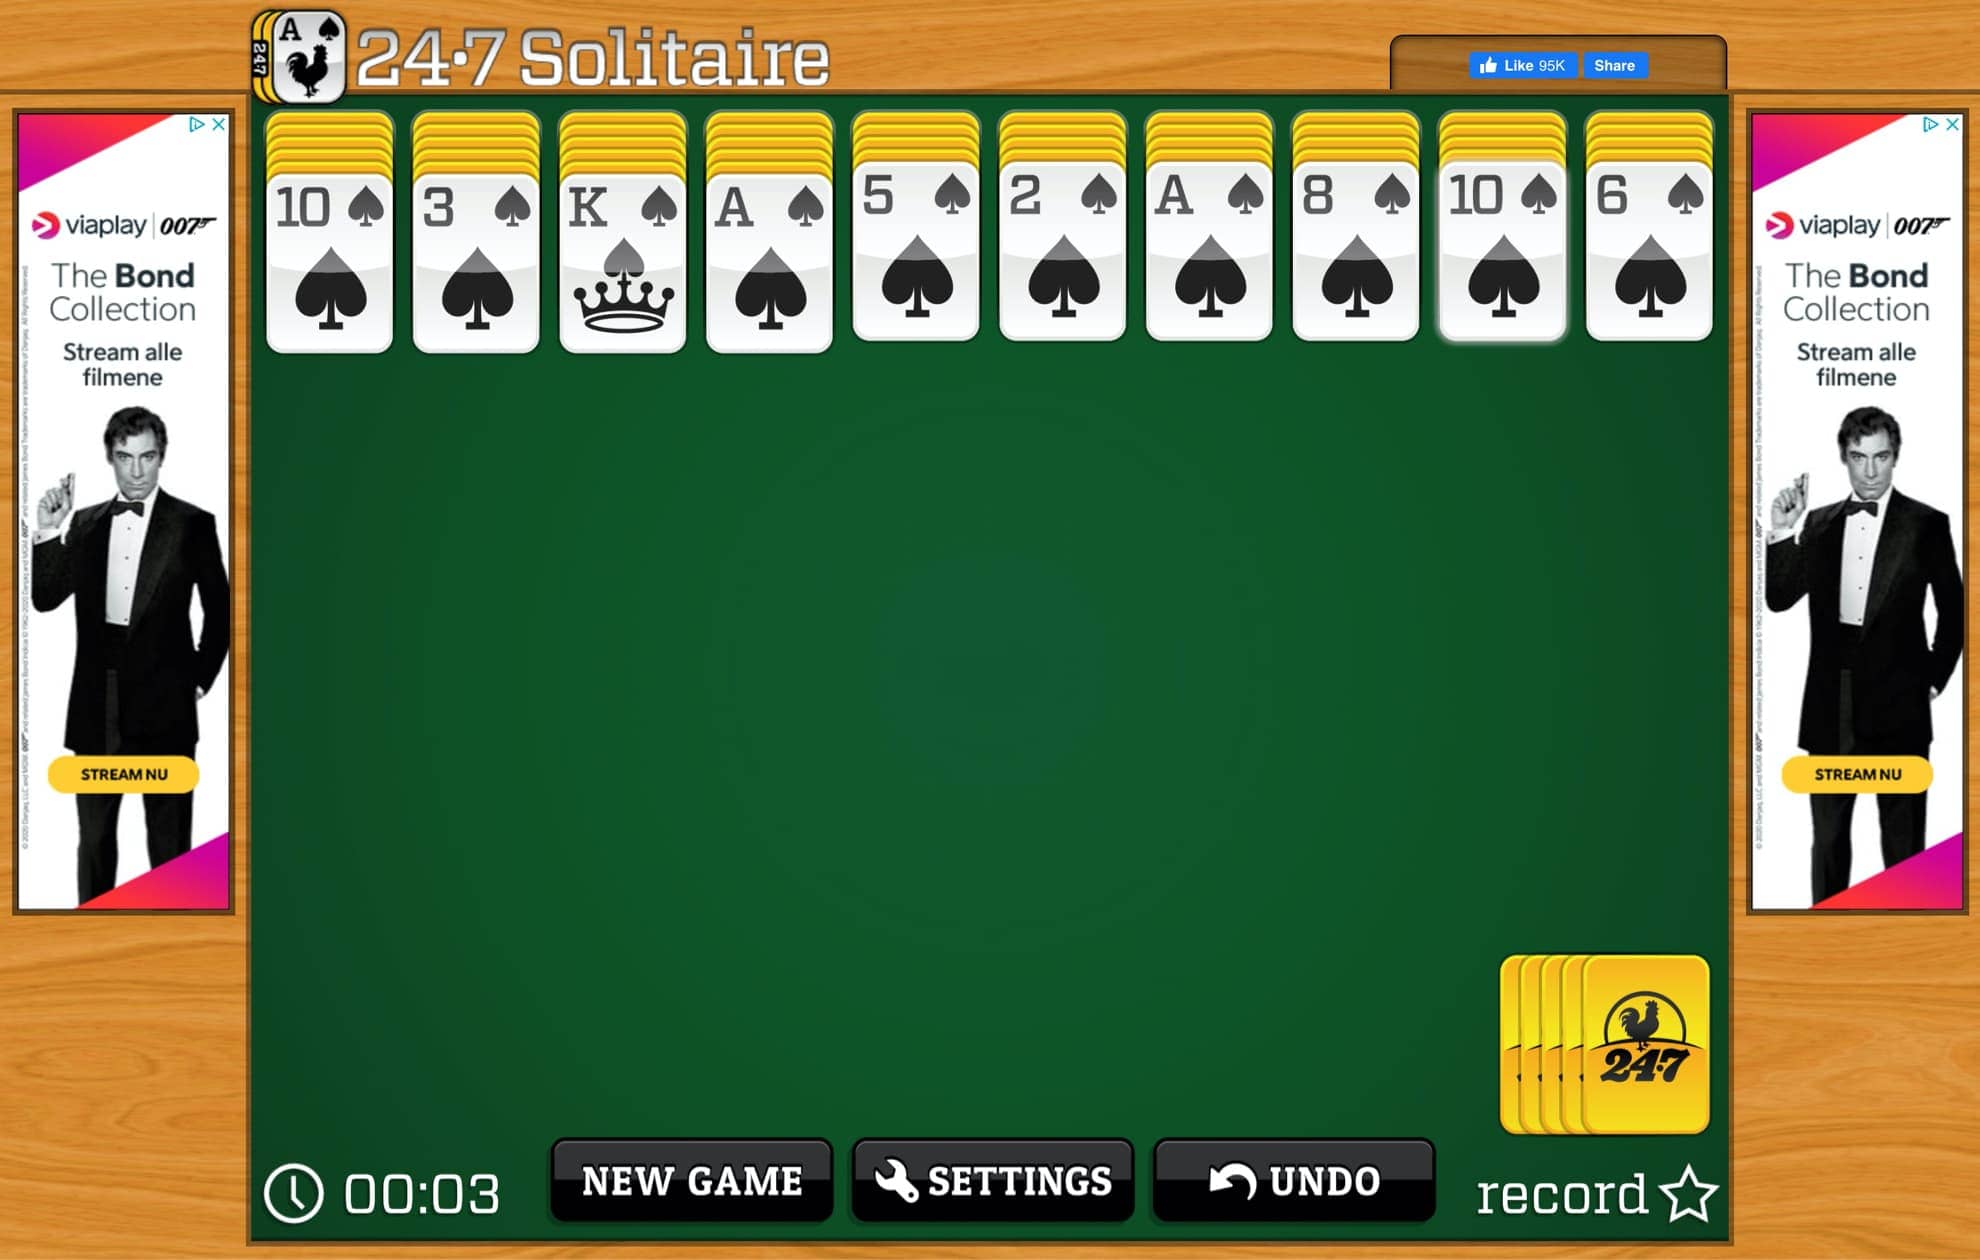 247 spades